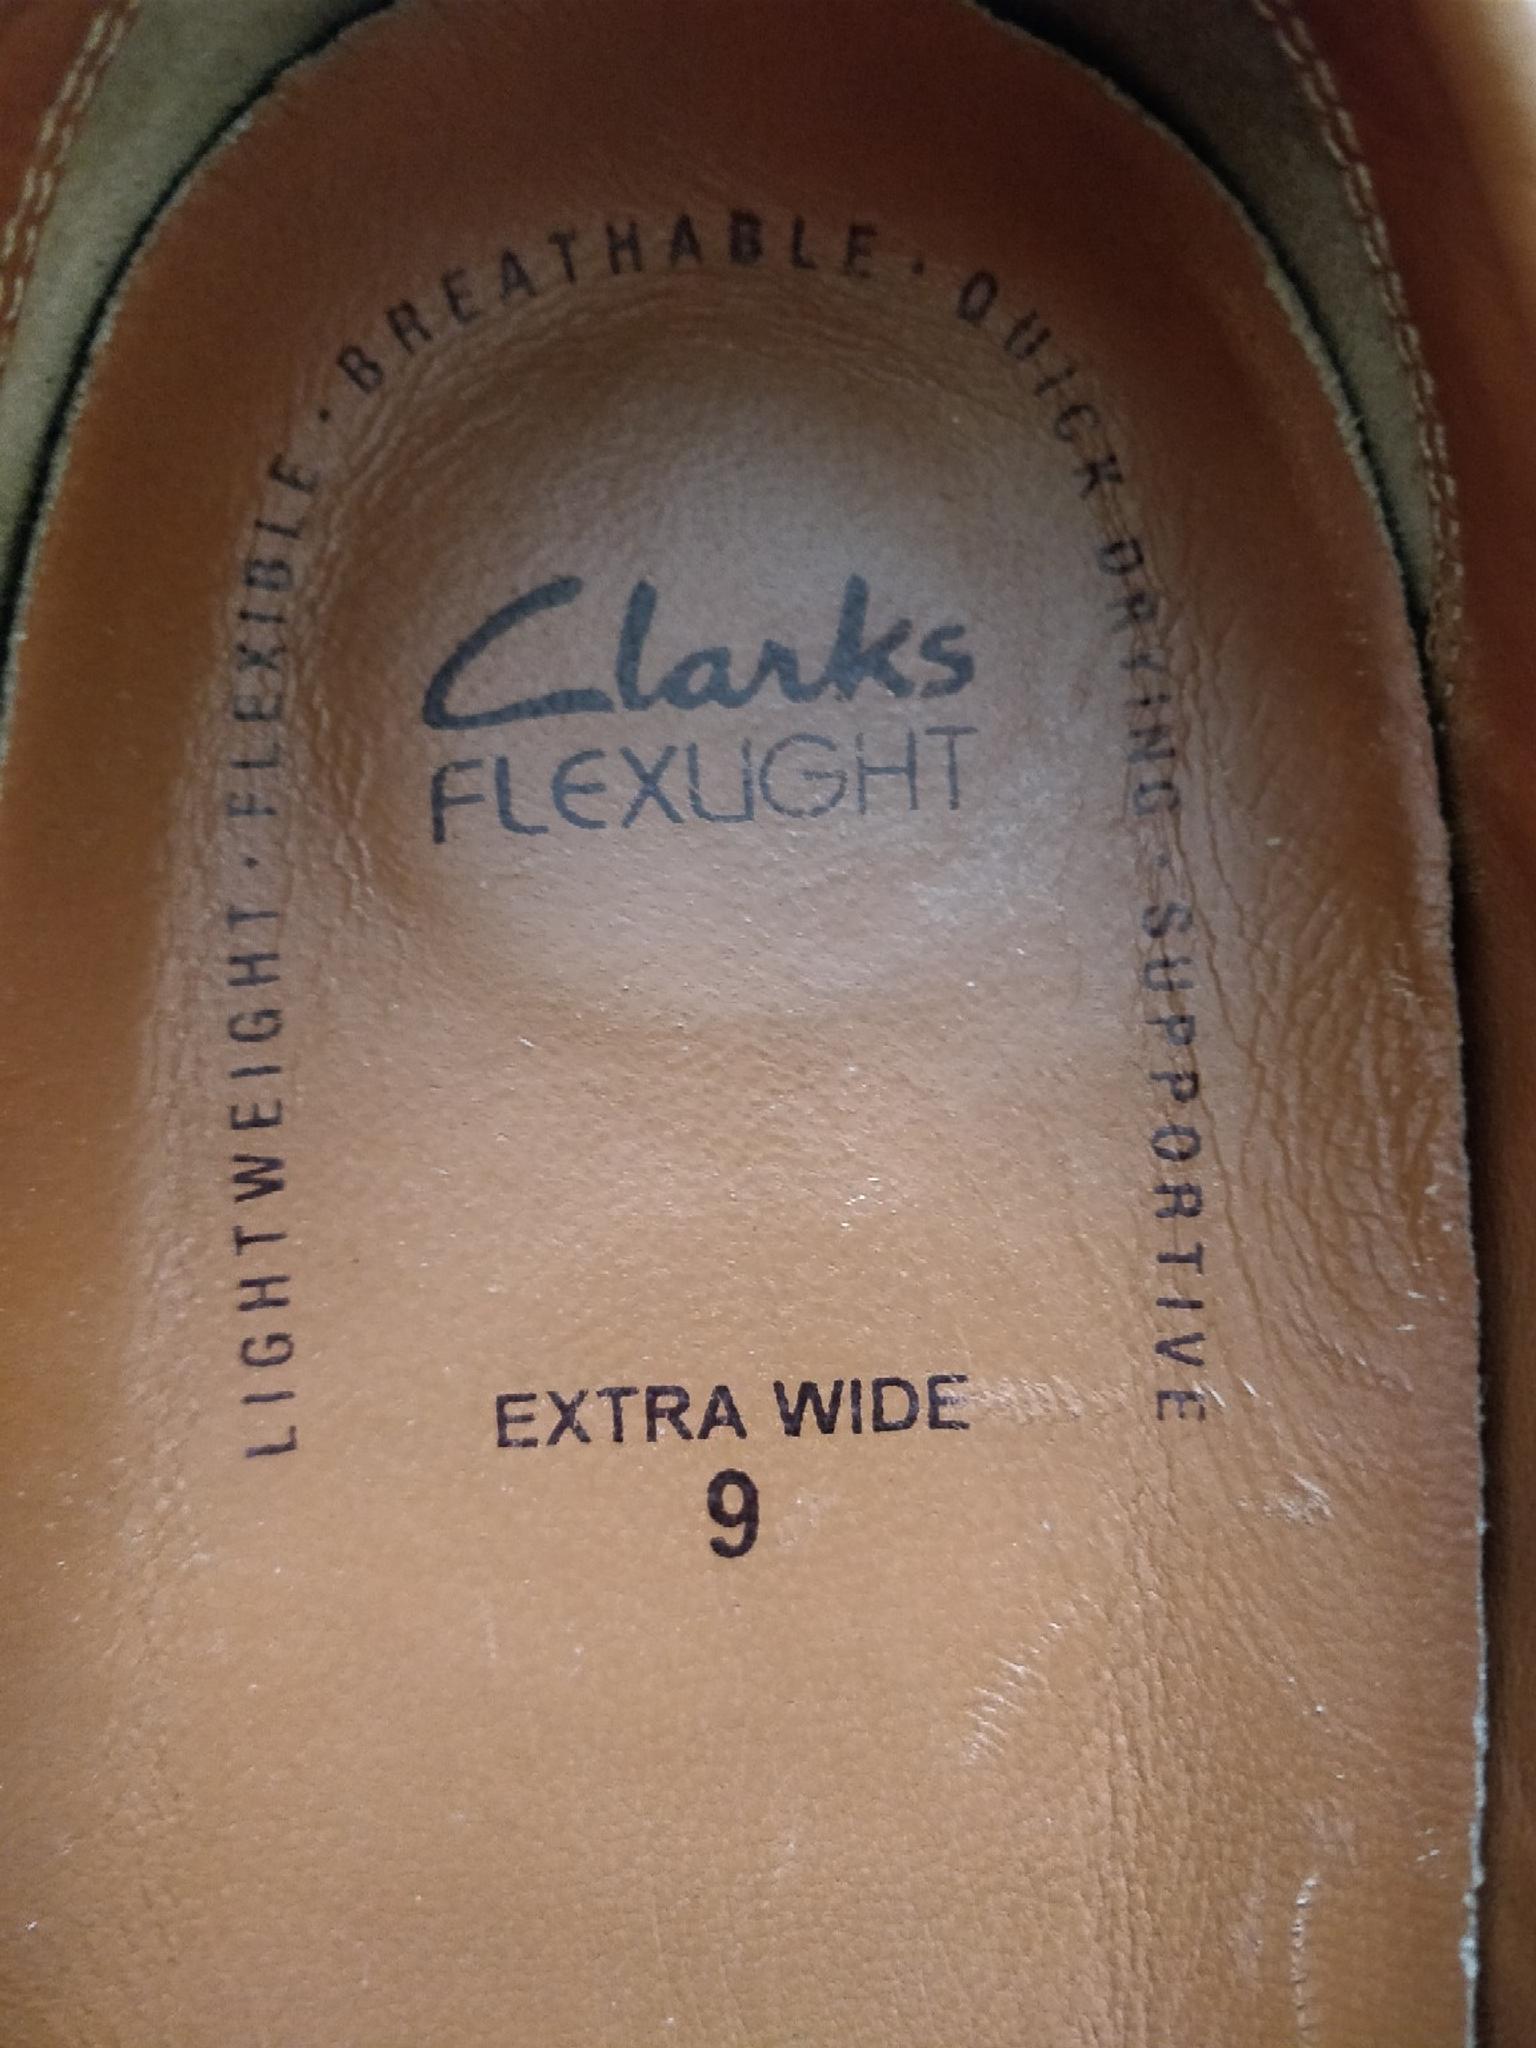 clarks flexlight shoes